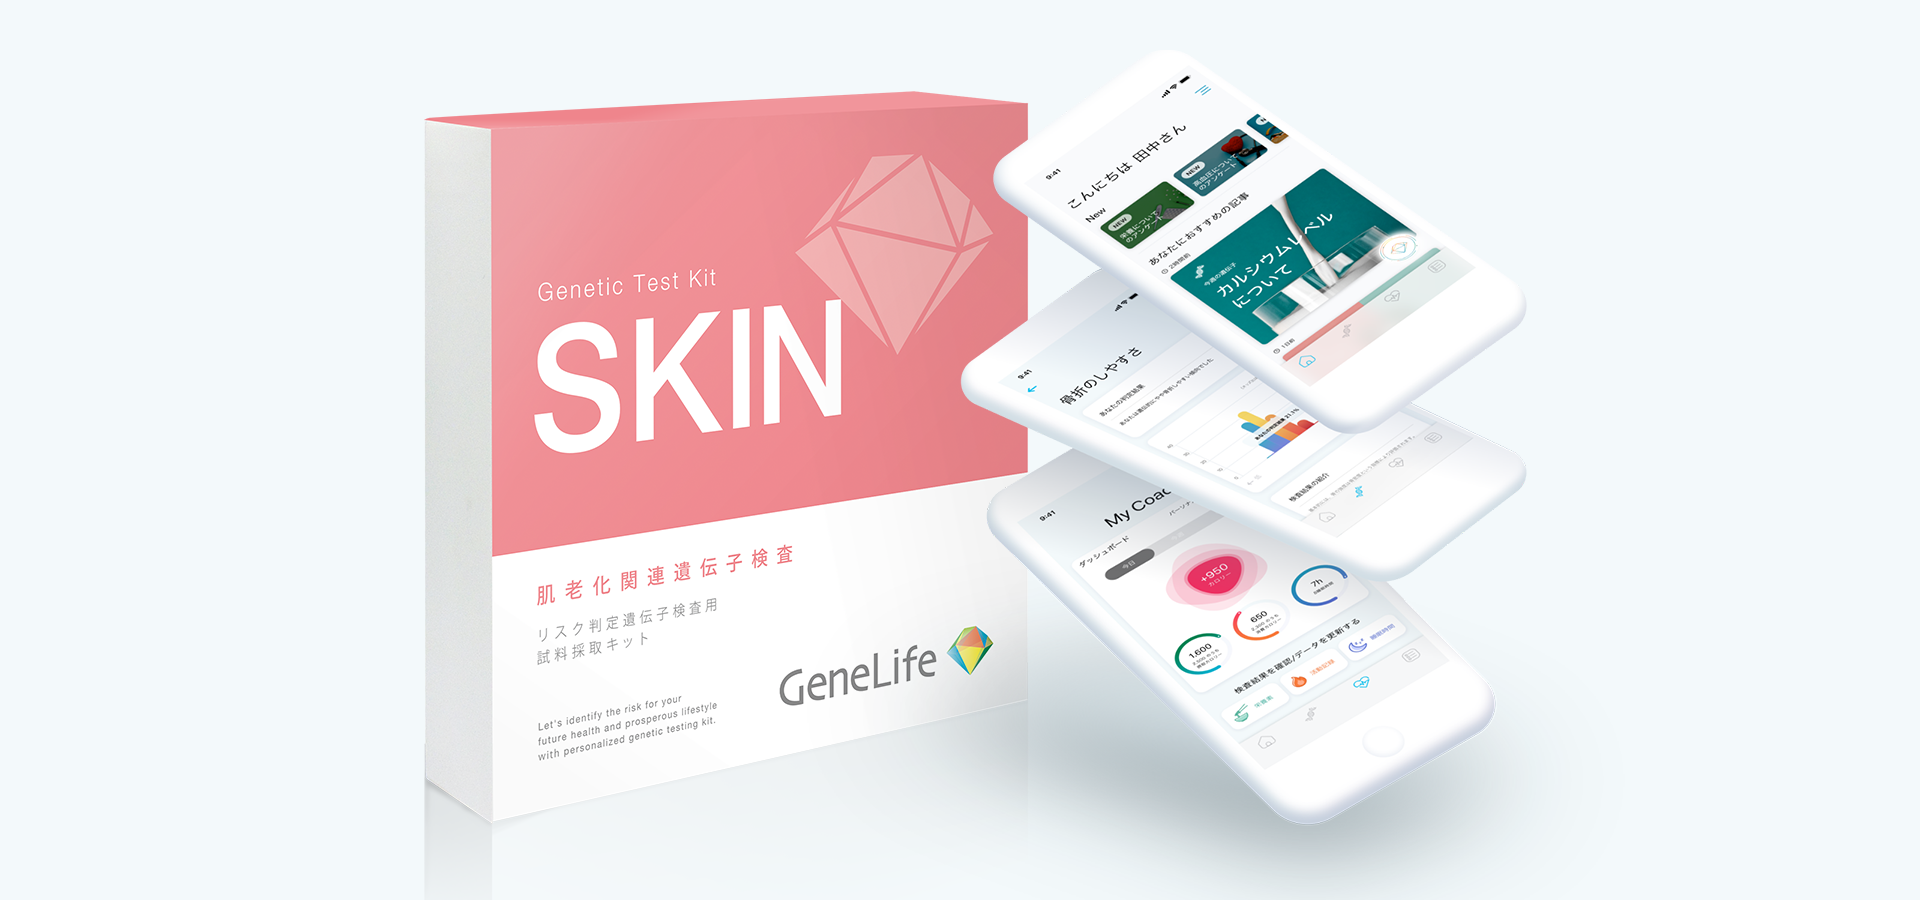 GeneLife3.0アプリ